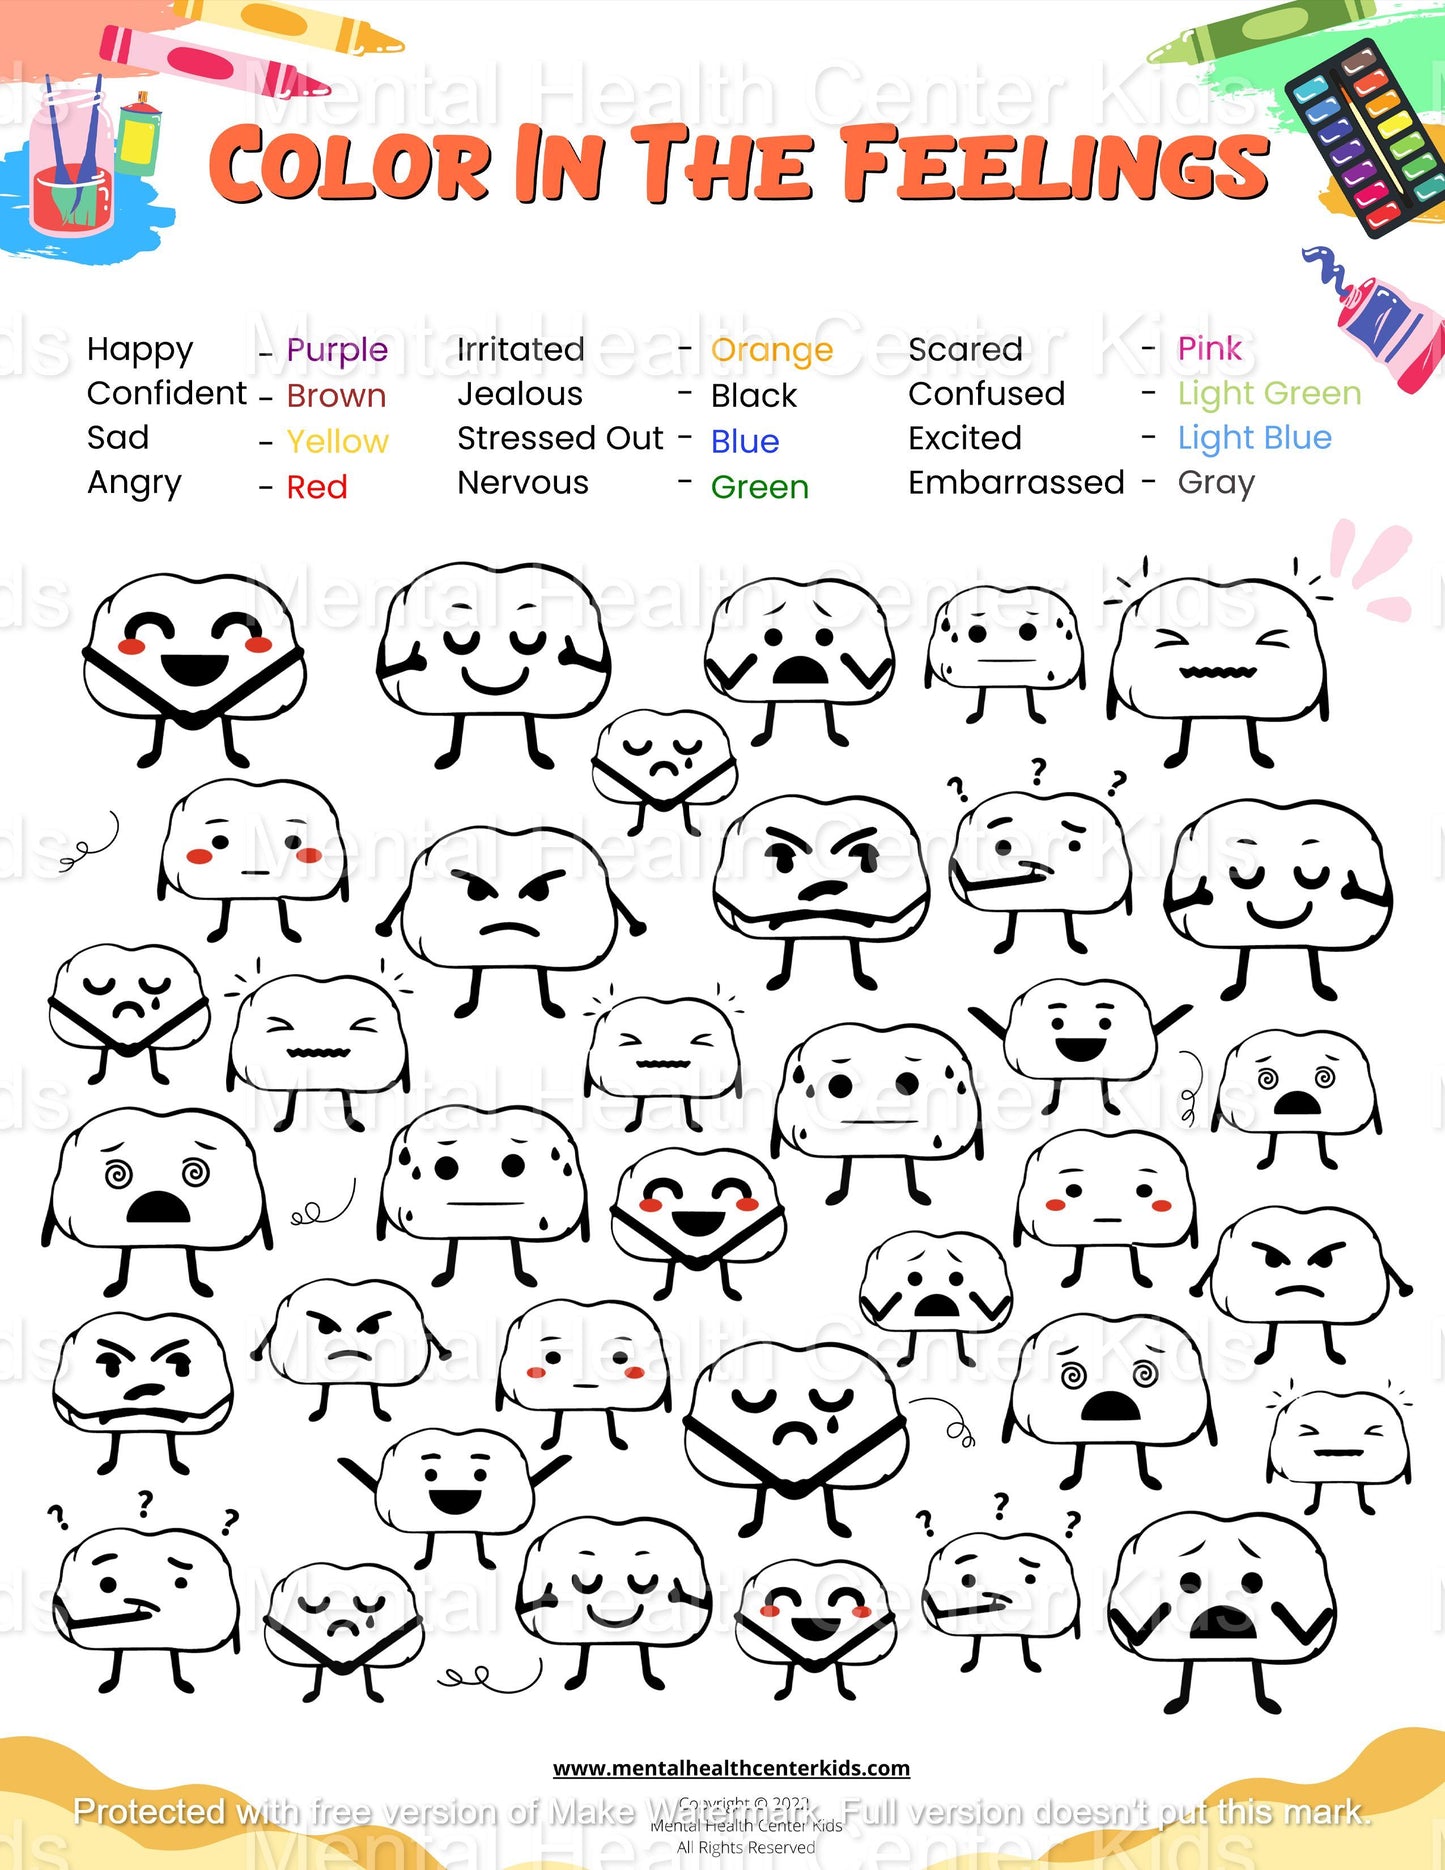 emoji coloring page